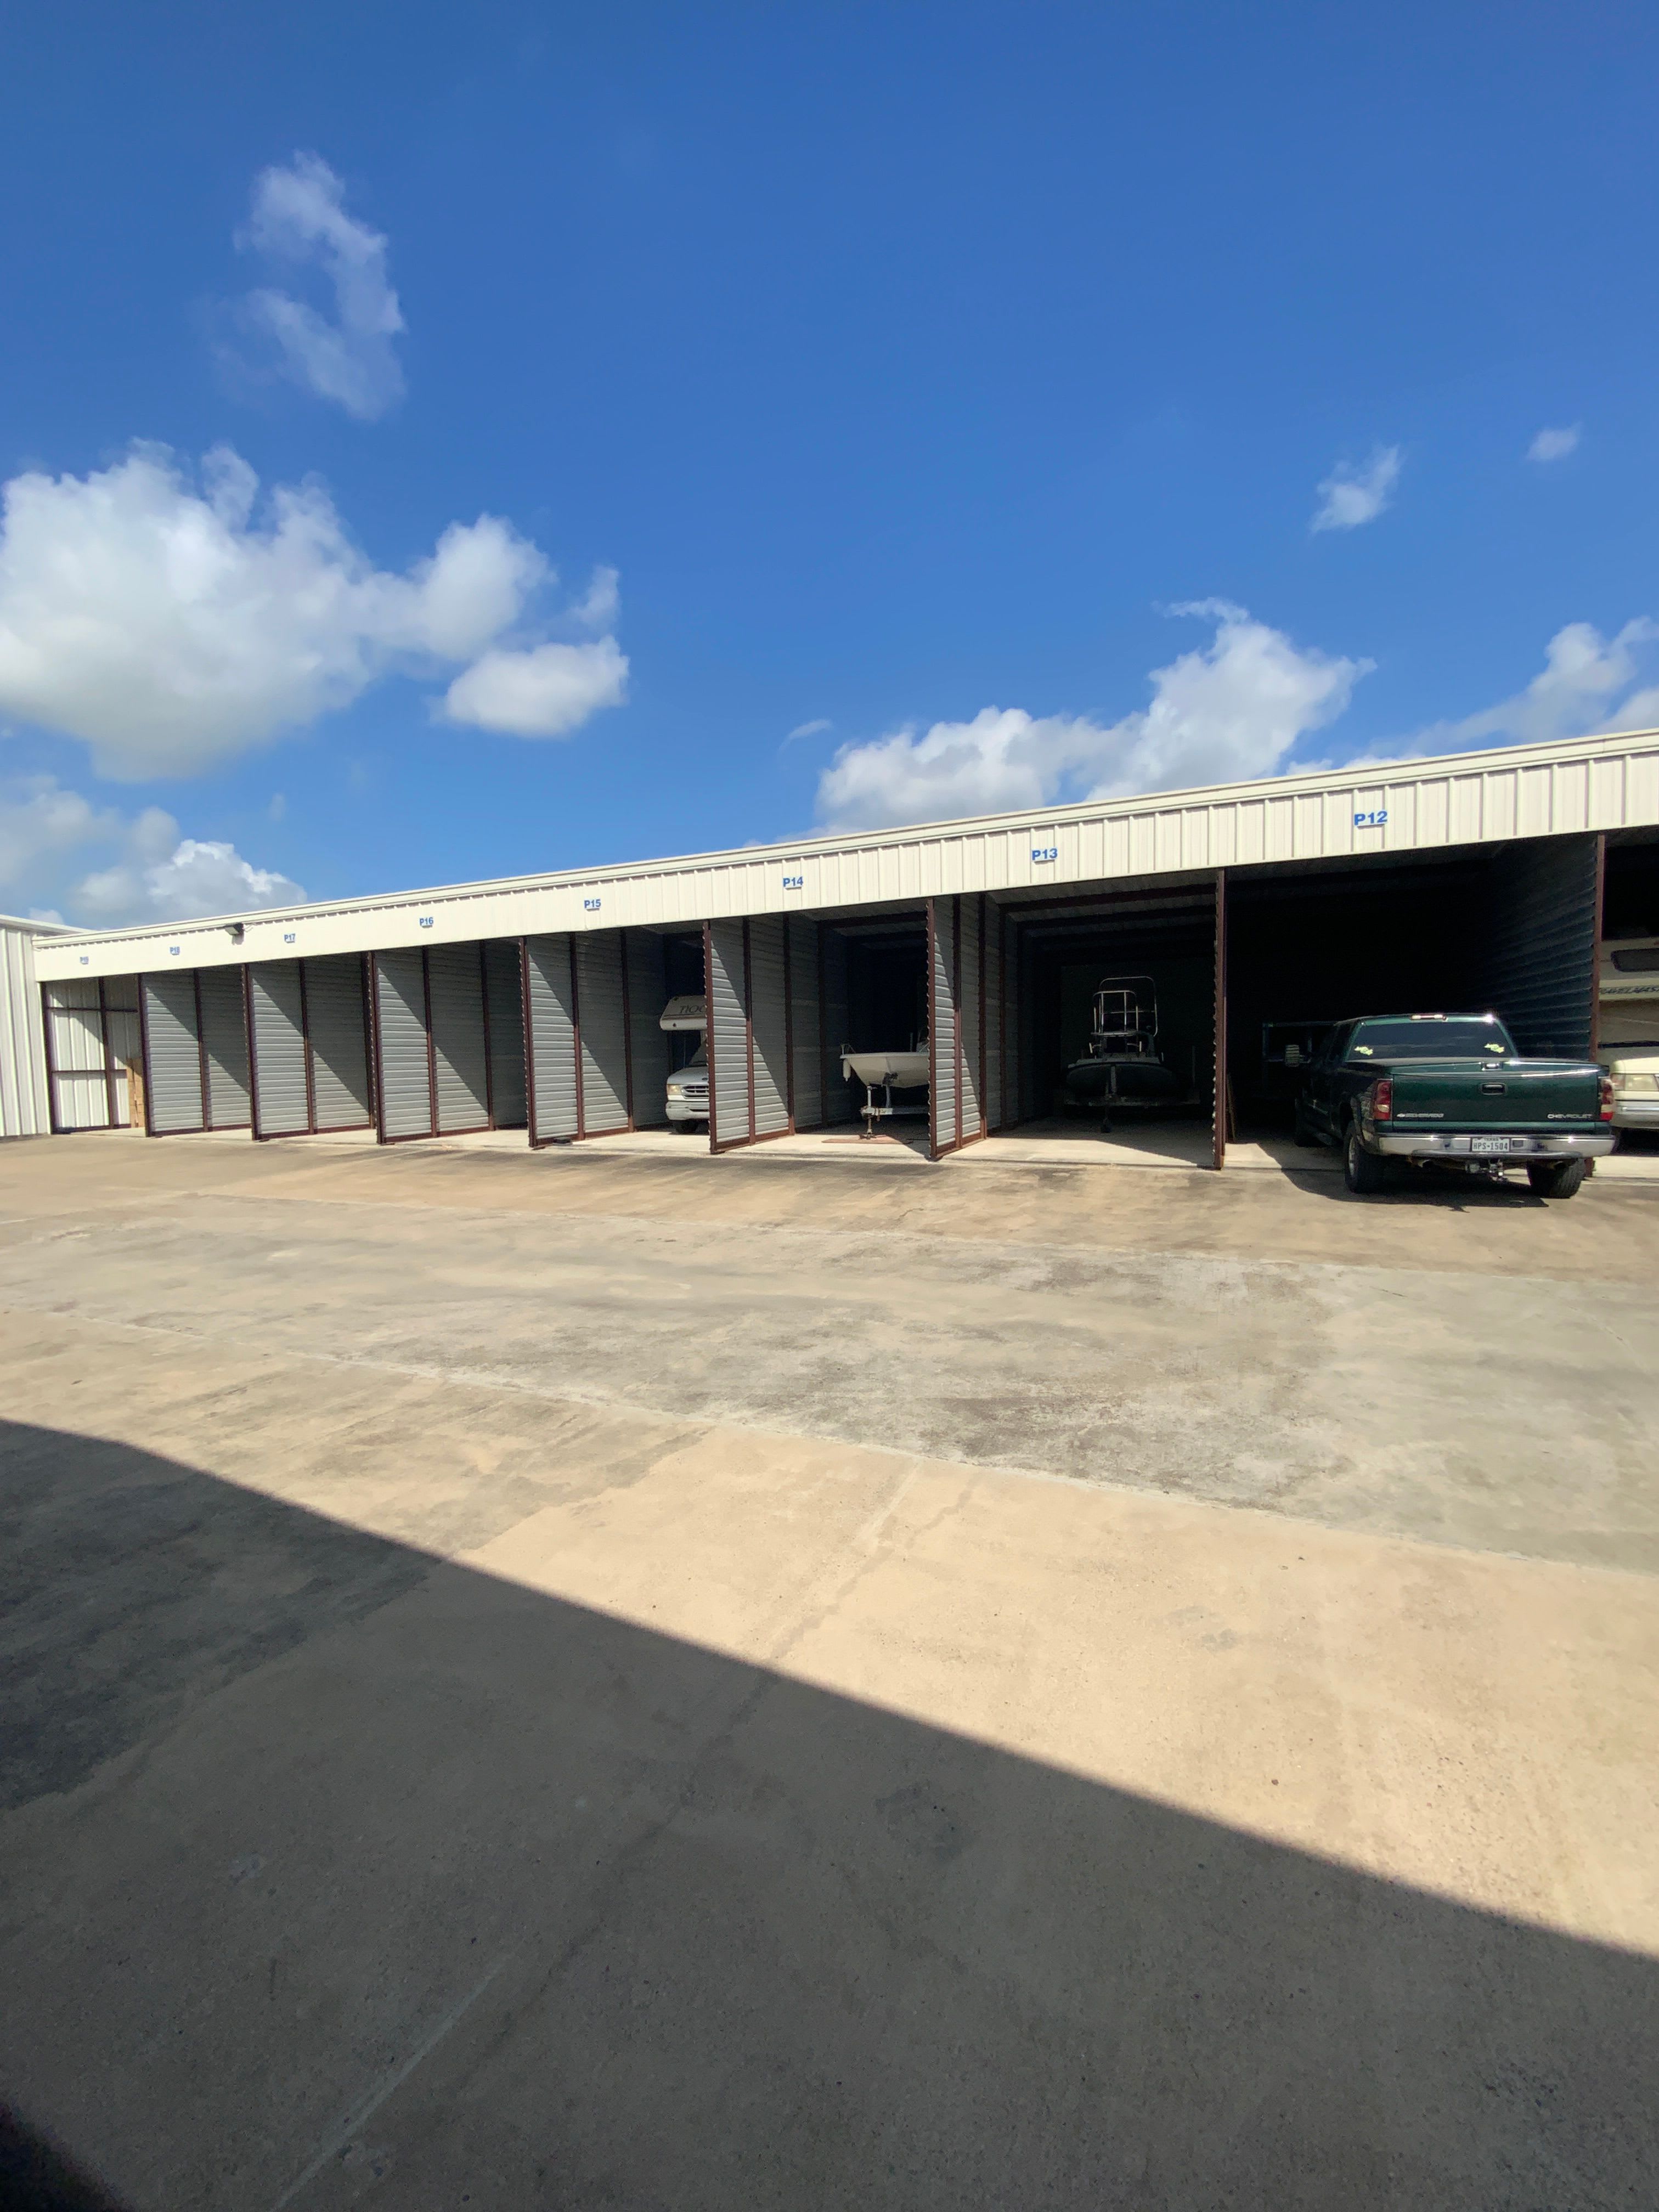 Learn more about auto storage at KO Storage of San Benito in San Benito, Texas